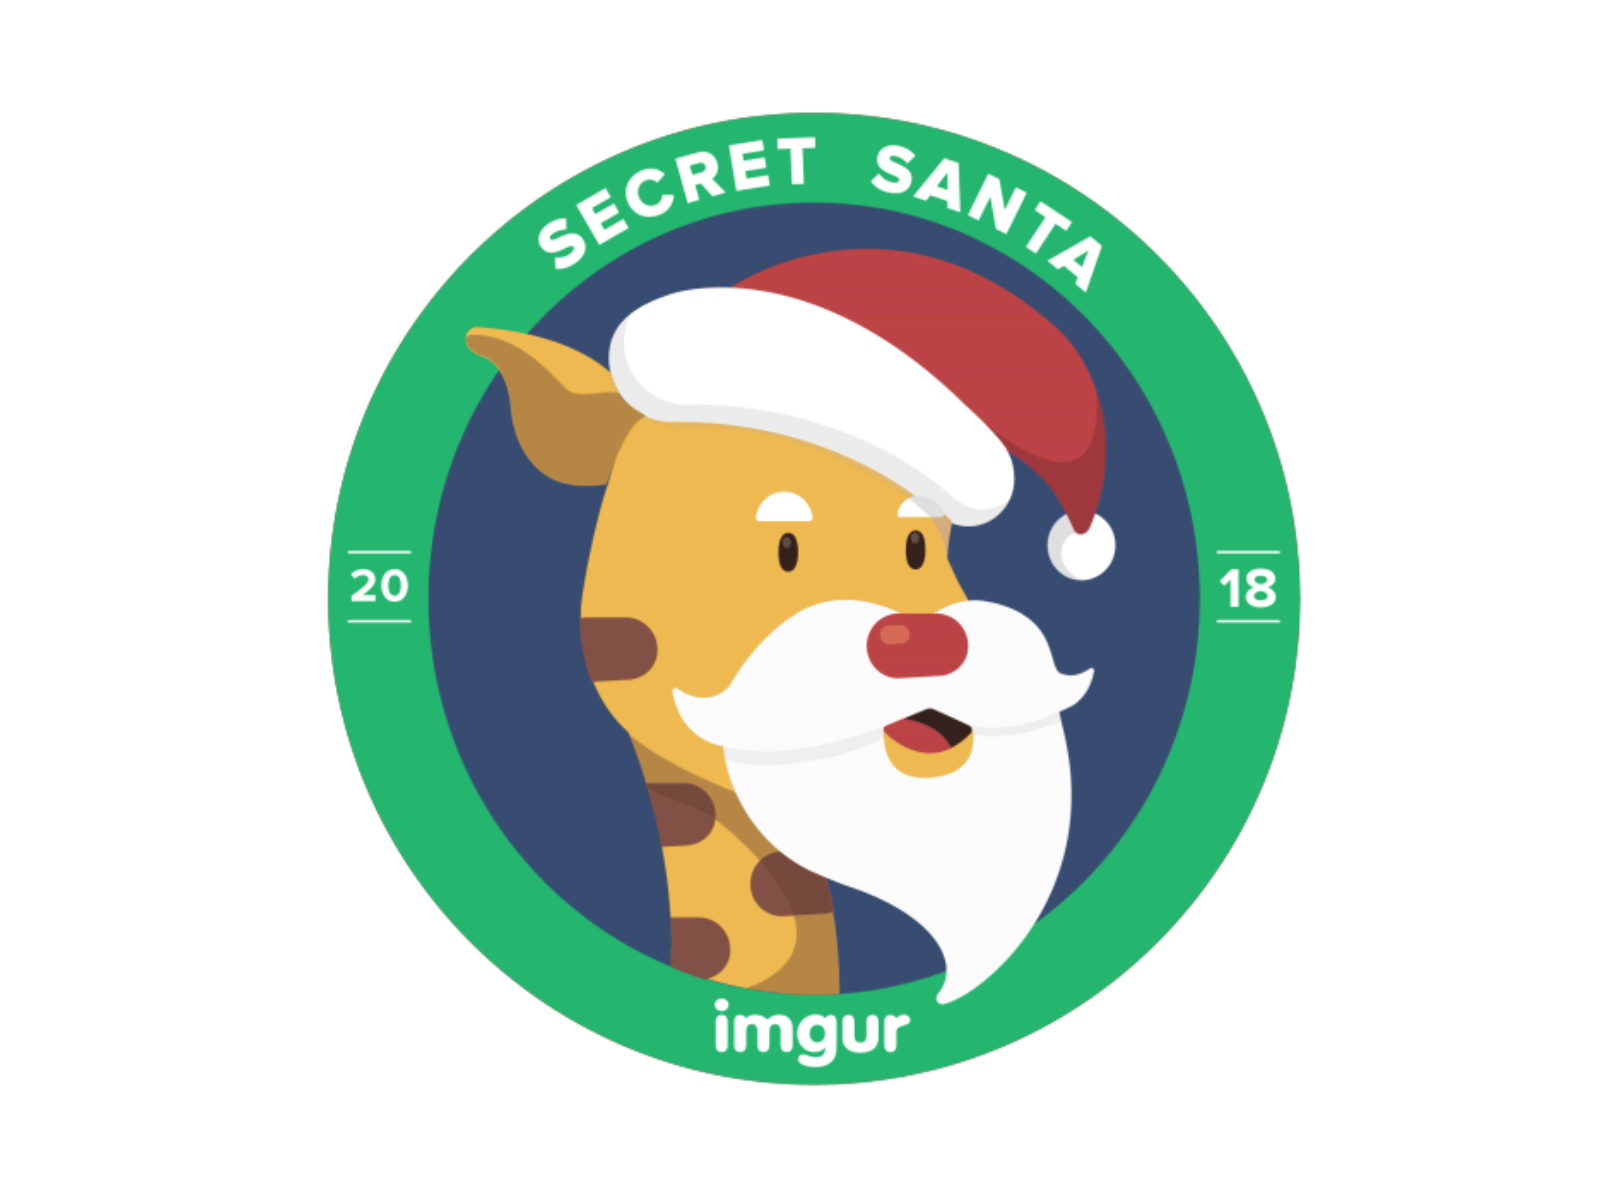 Imgur Secret Santa Animation By Ryan Howard On Dribbble